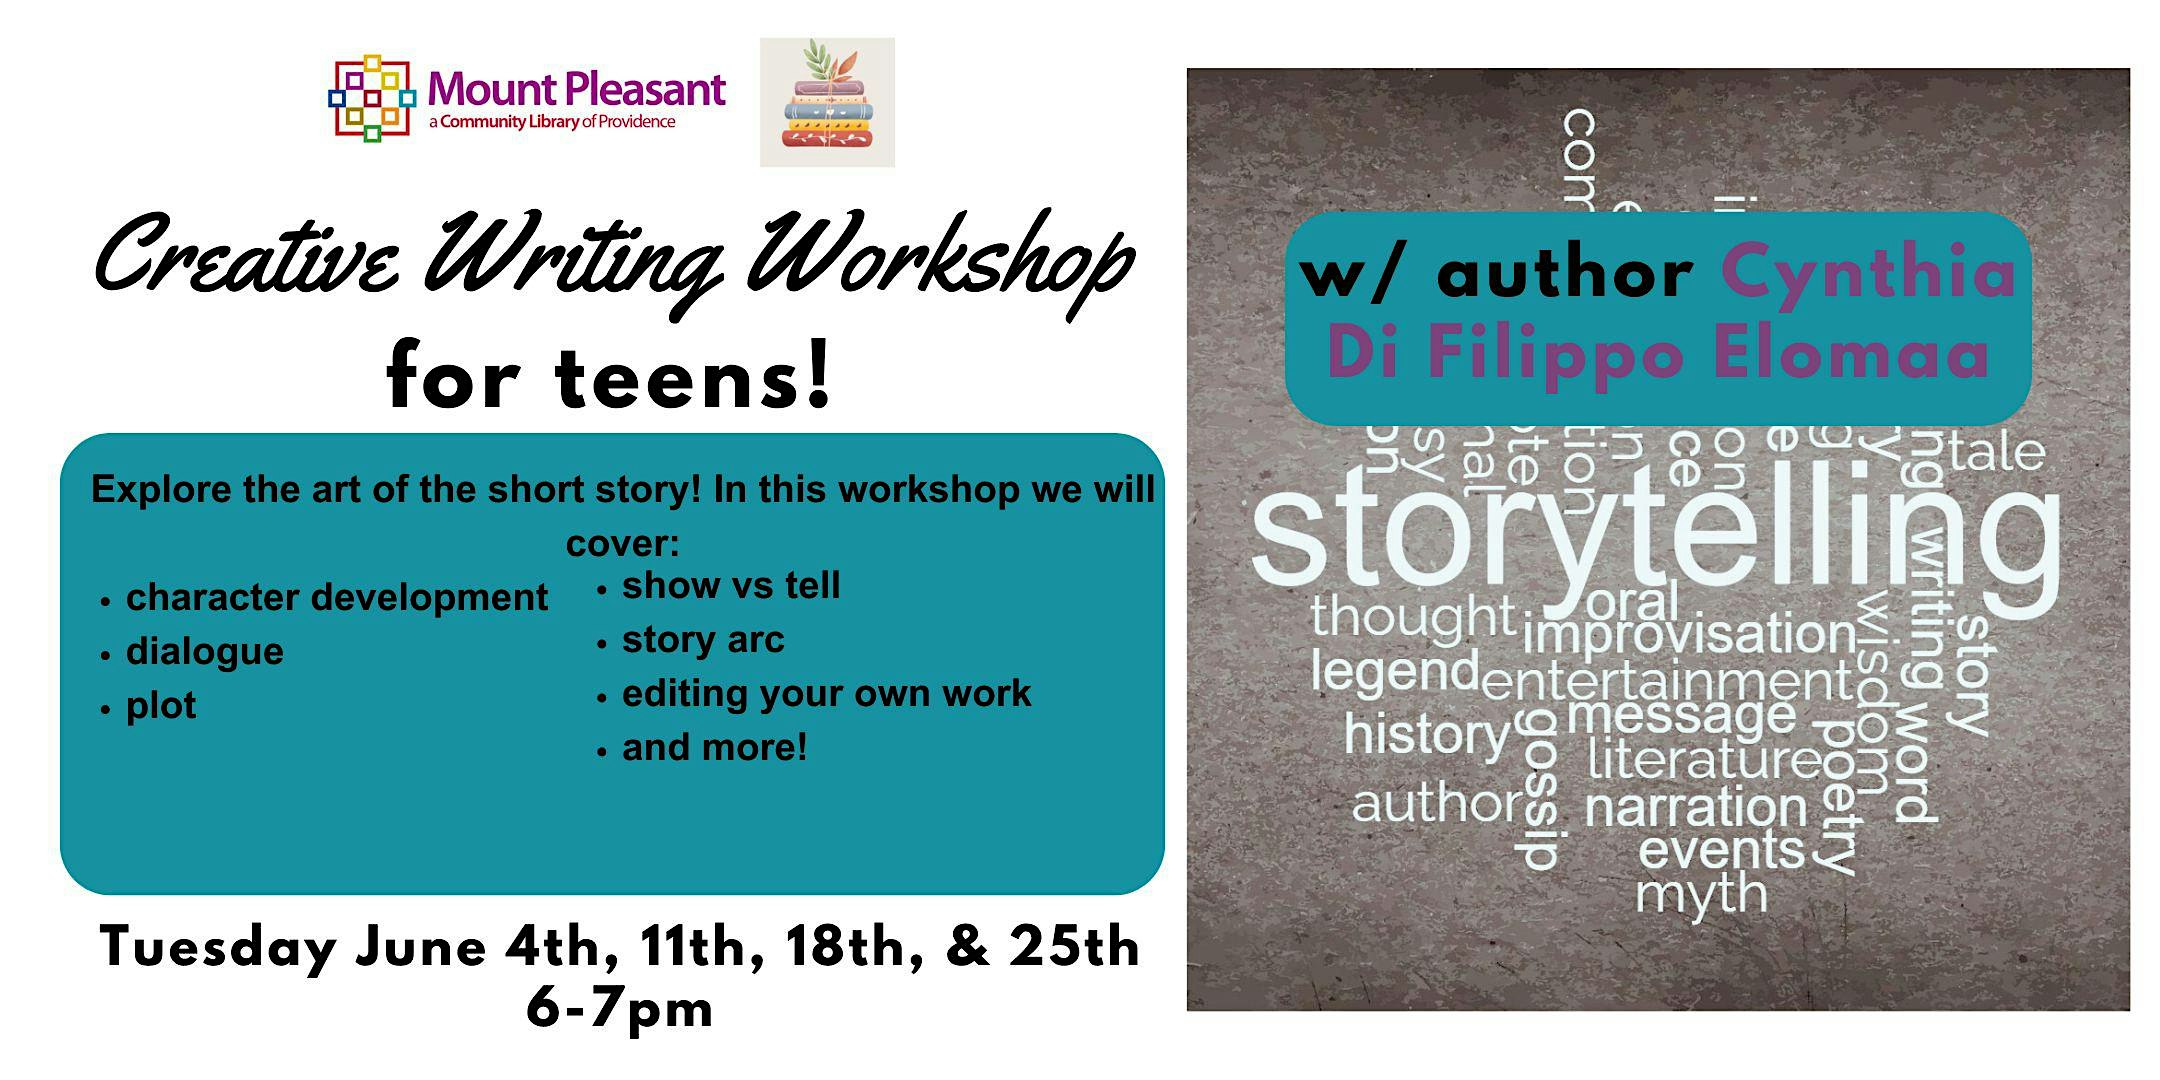 Creative Writing Workshop for Teens